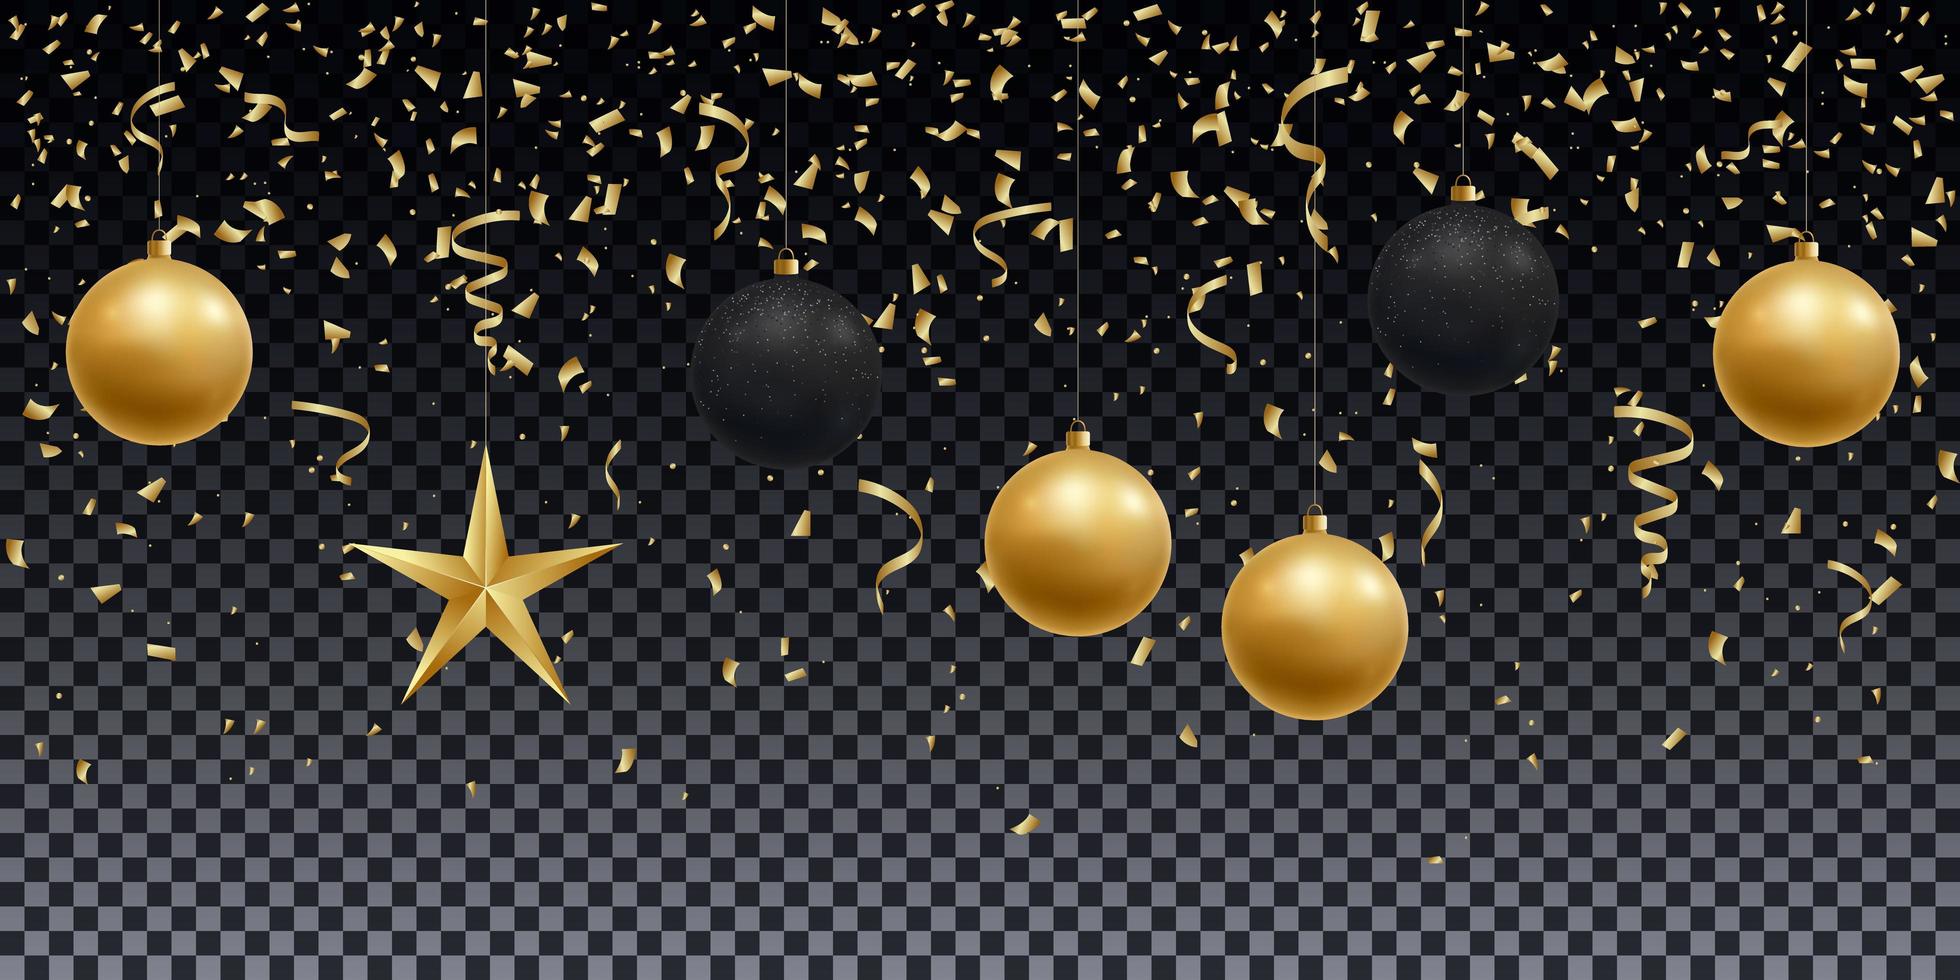 realistische glanzende gouden en zwarte ballen, ster en confetti vector